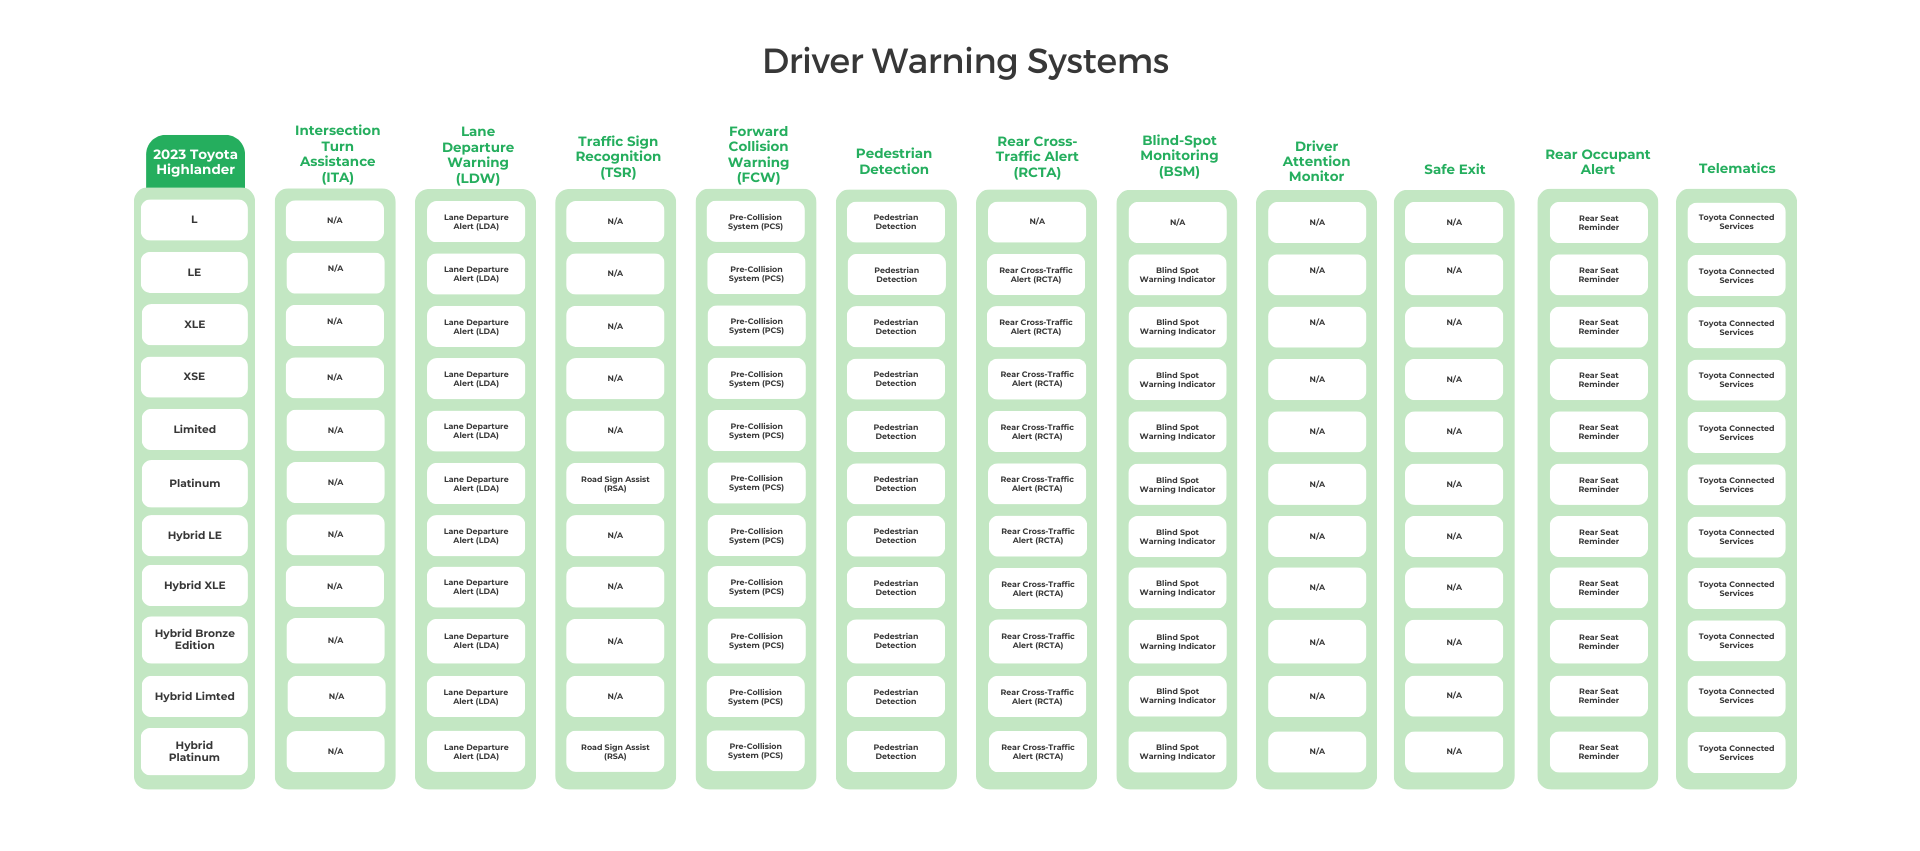 2023 Toyota Highlander Driver Warning Systems